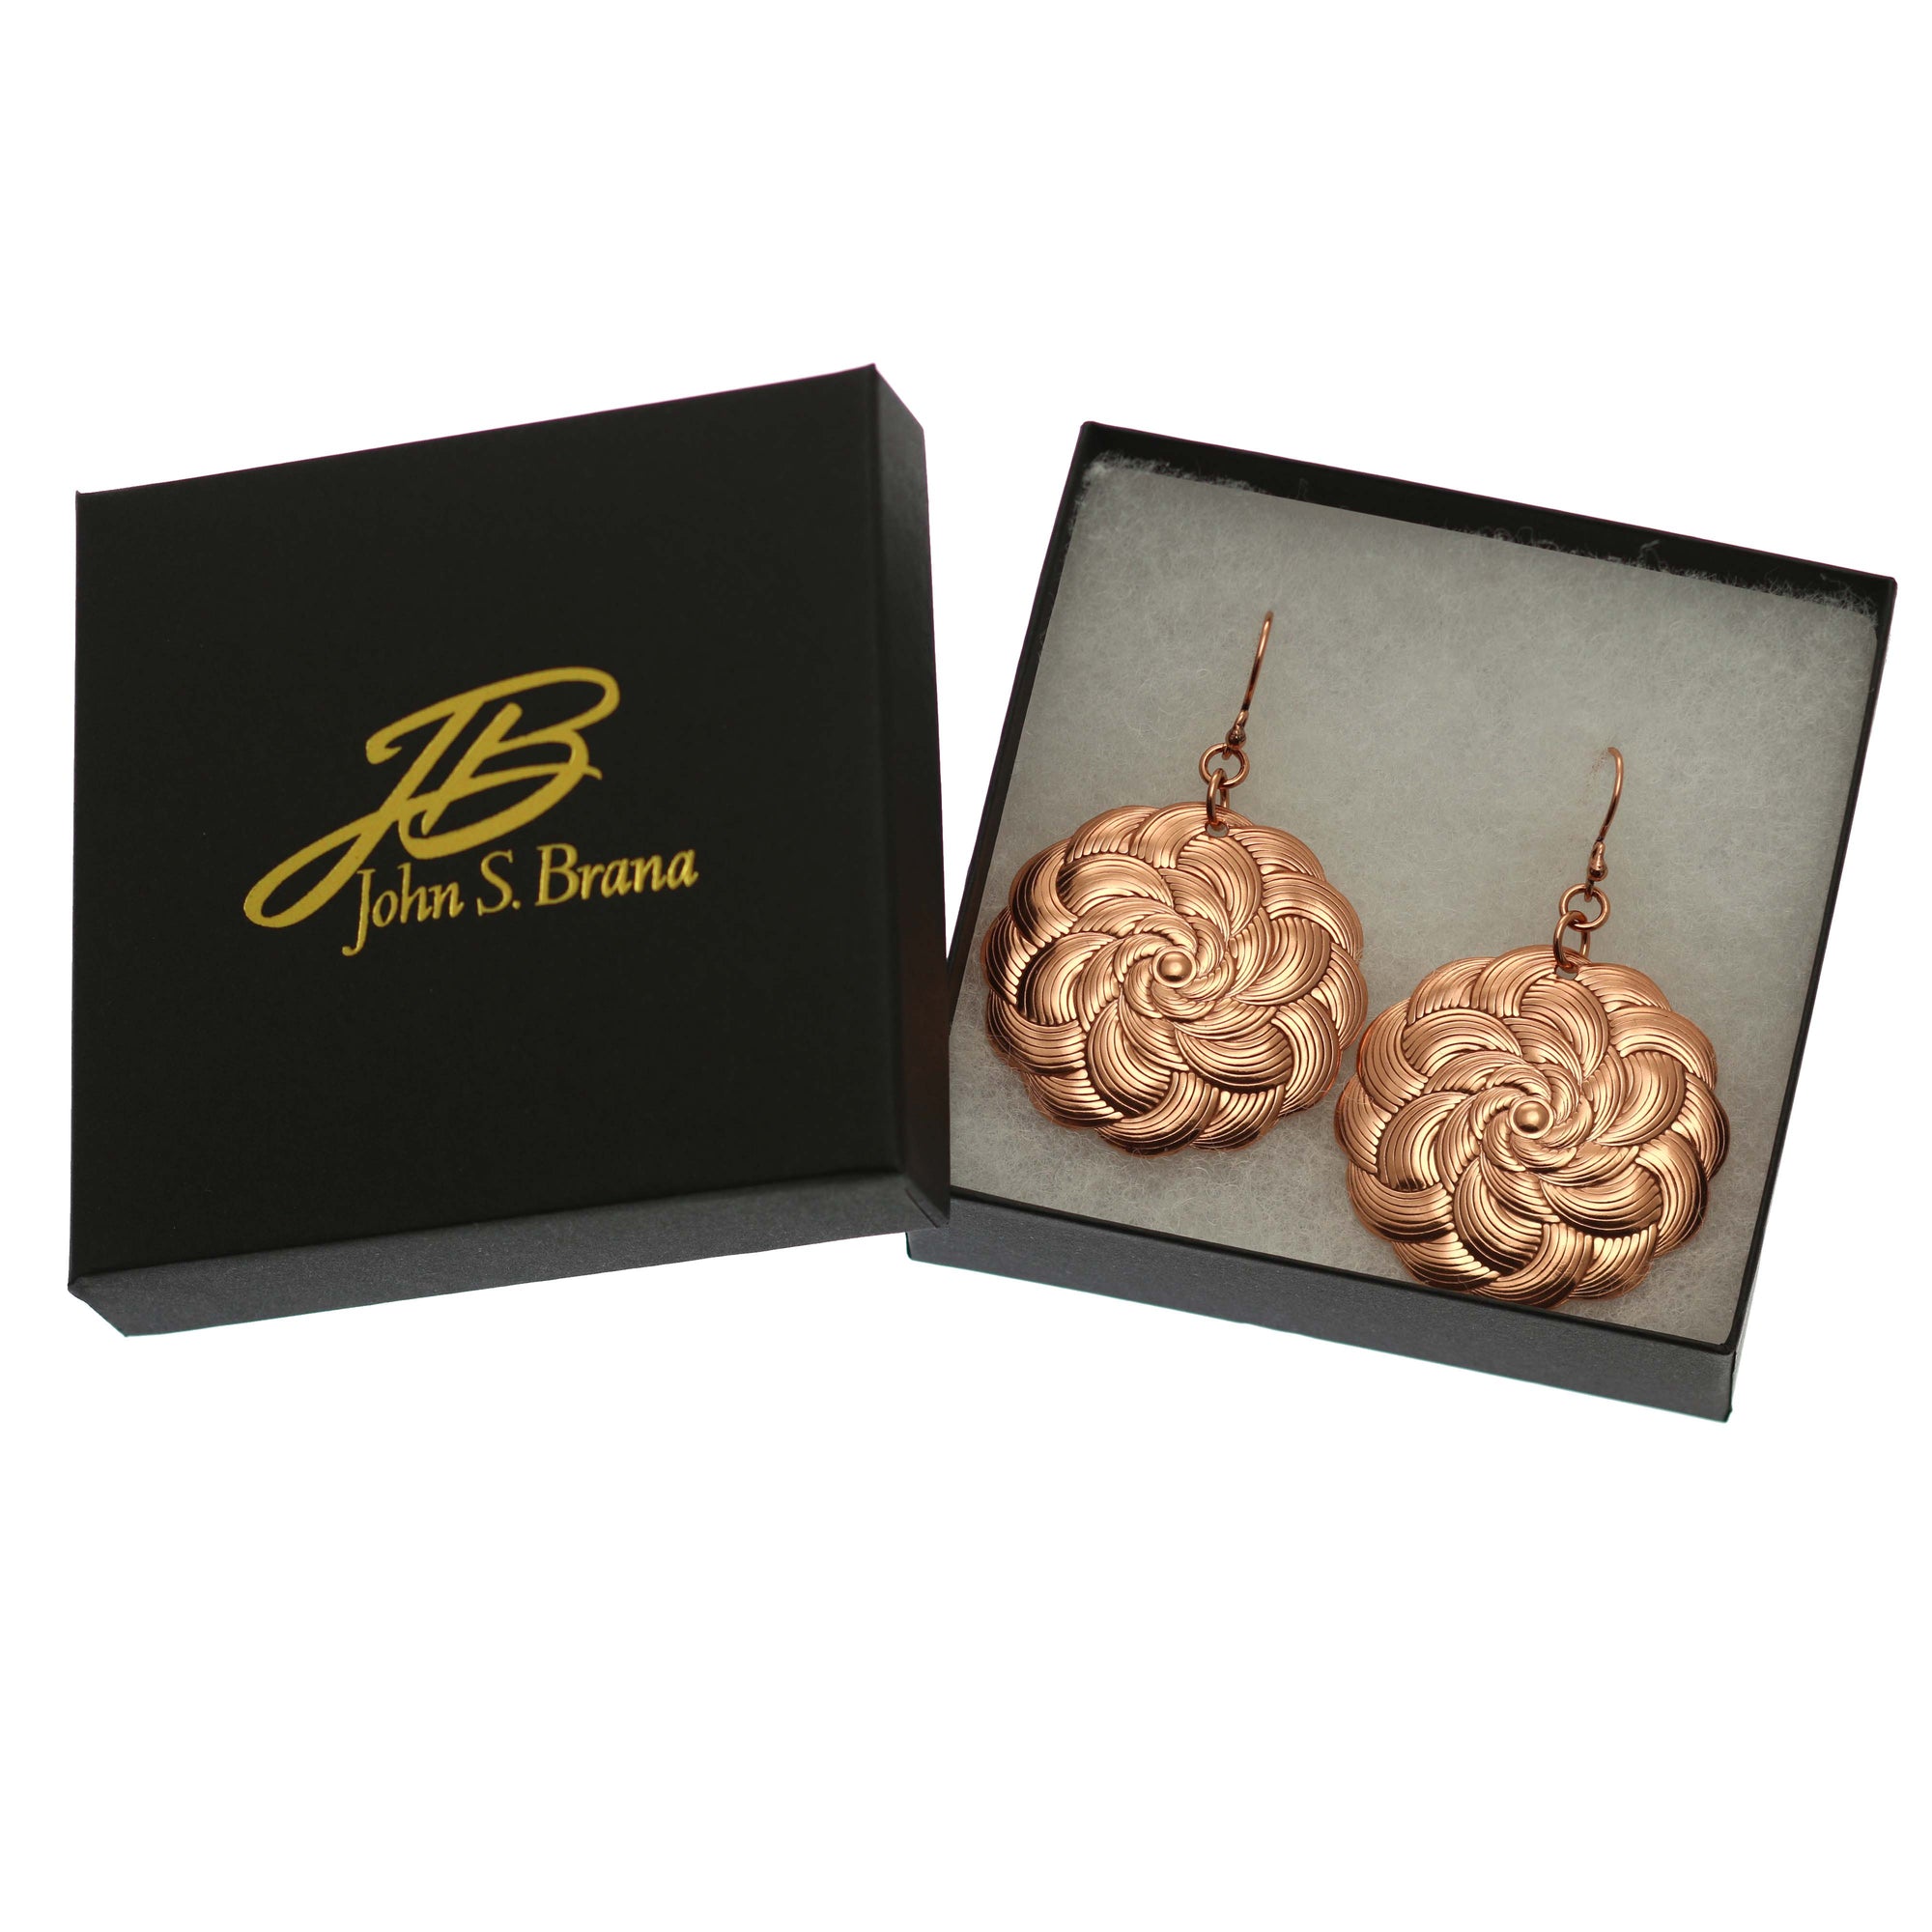 Copper Mandla Disc Earrings in a Black Gift Box with a Gold Logo John S. Brana